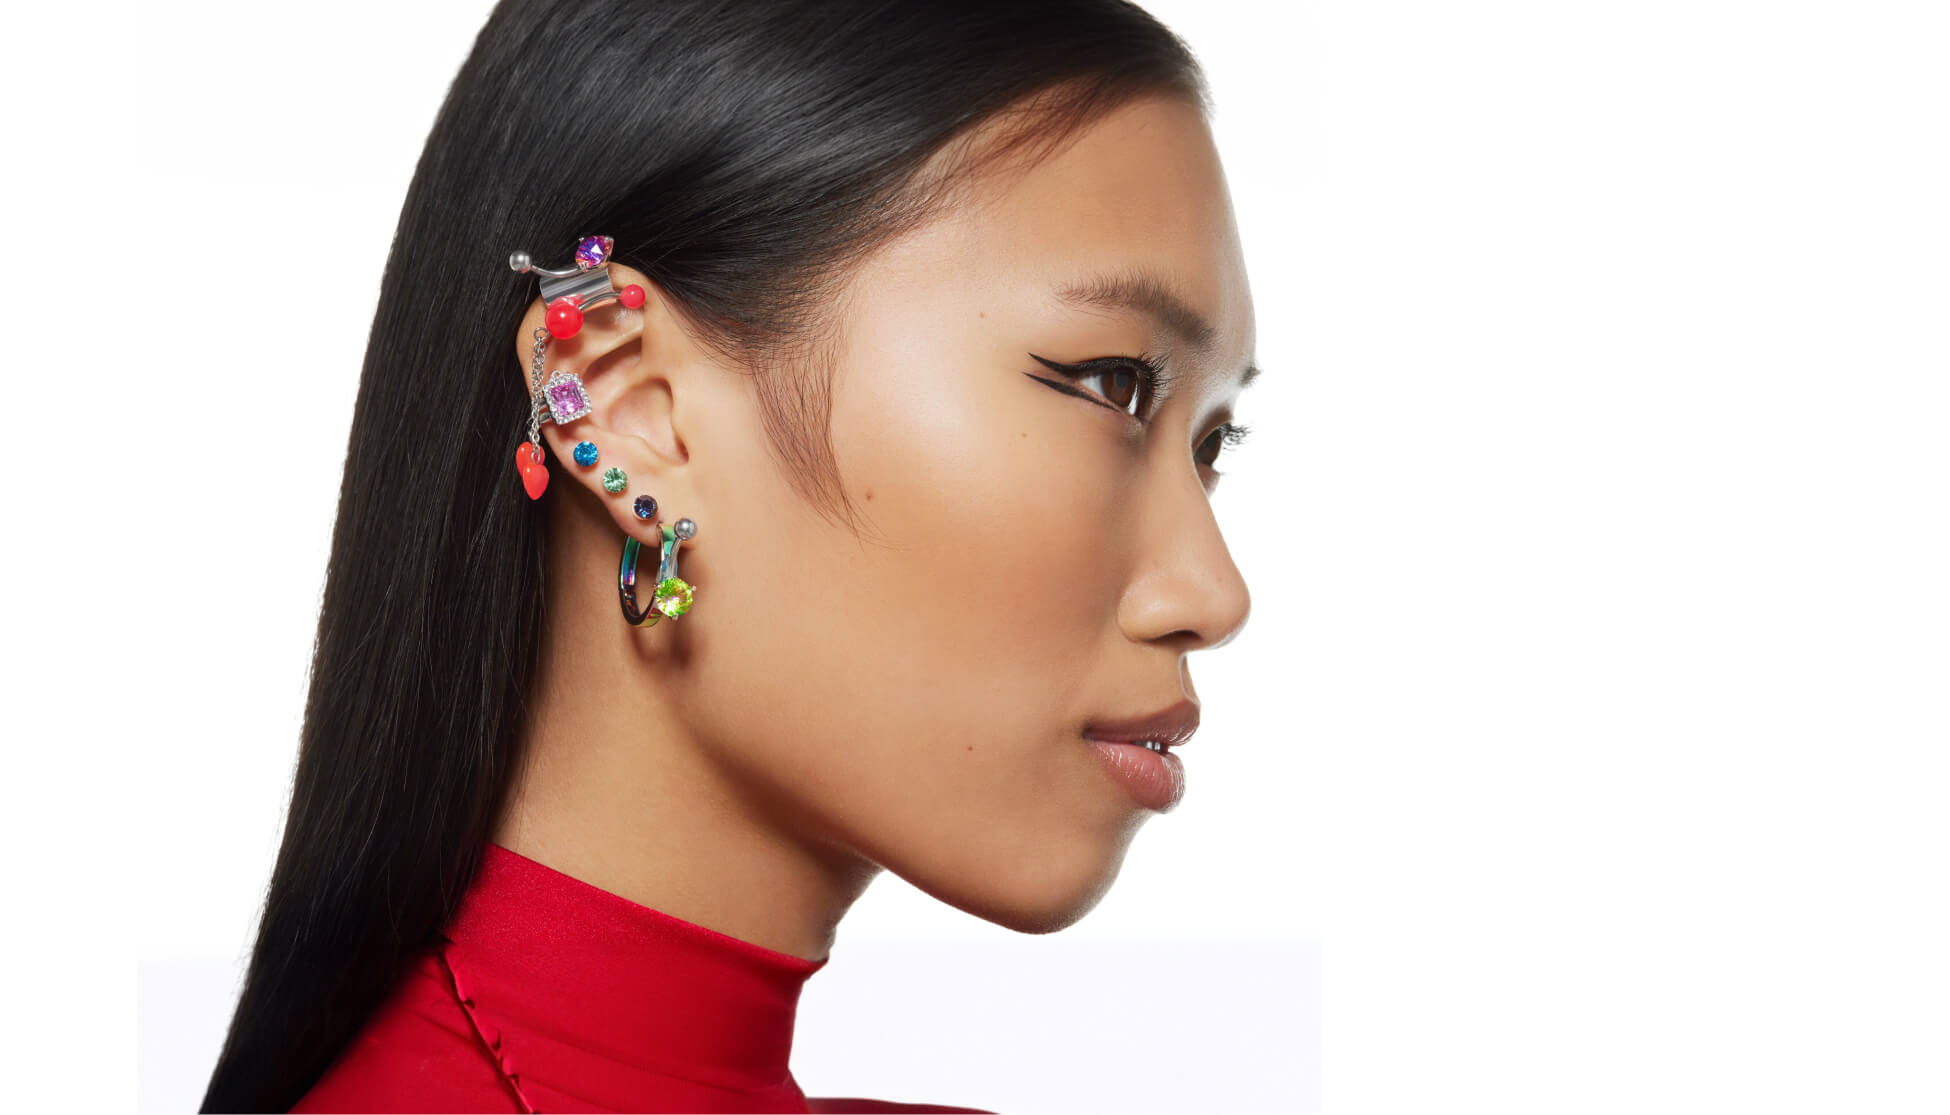 Buy Earrings for Women and Men Online | PALMONAS